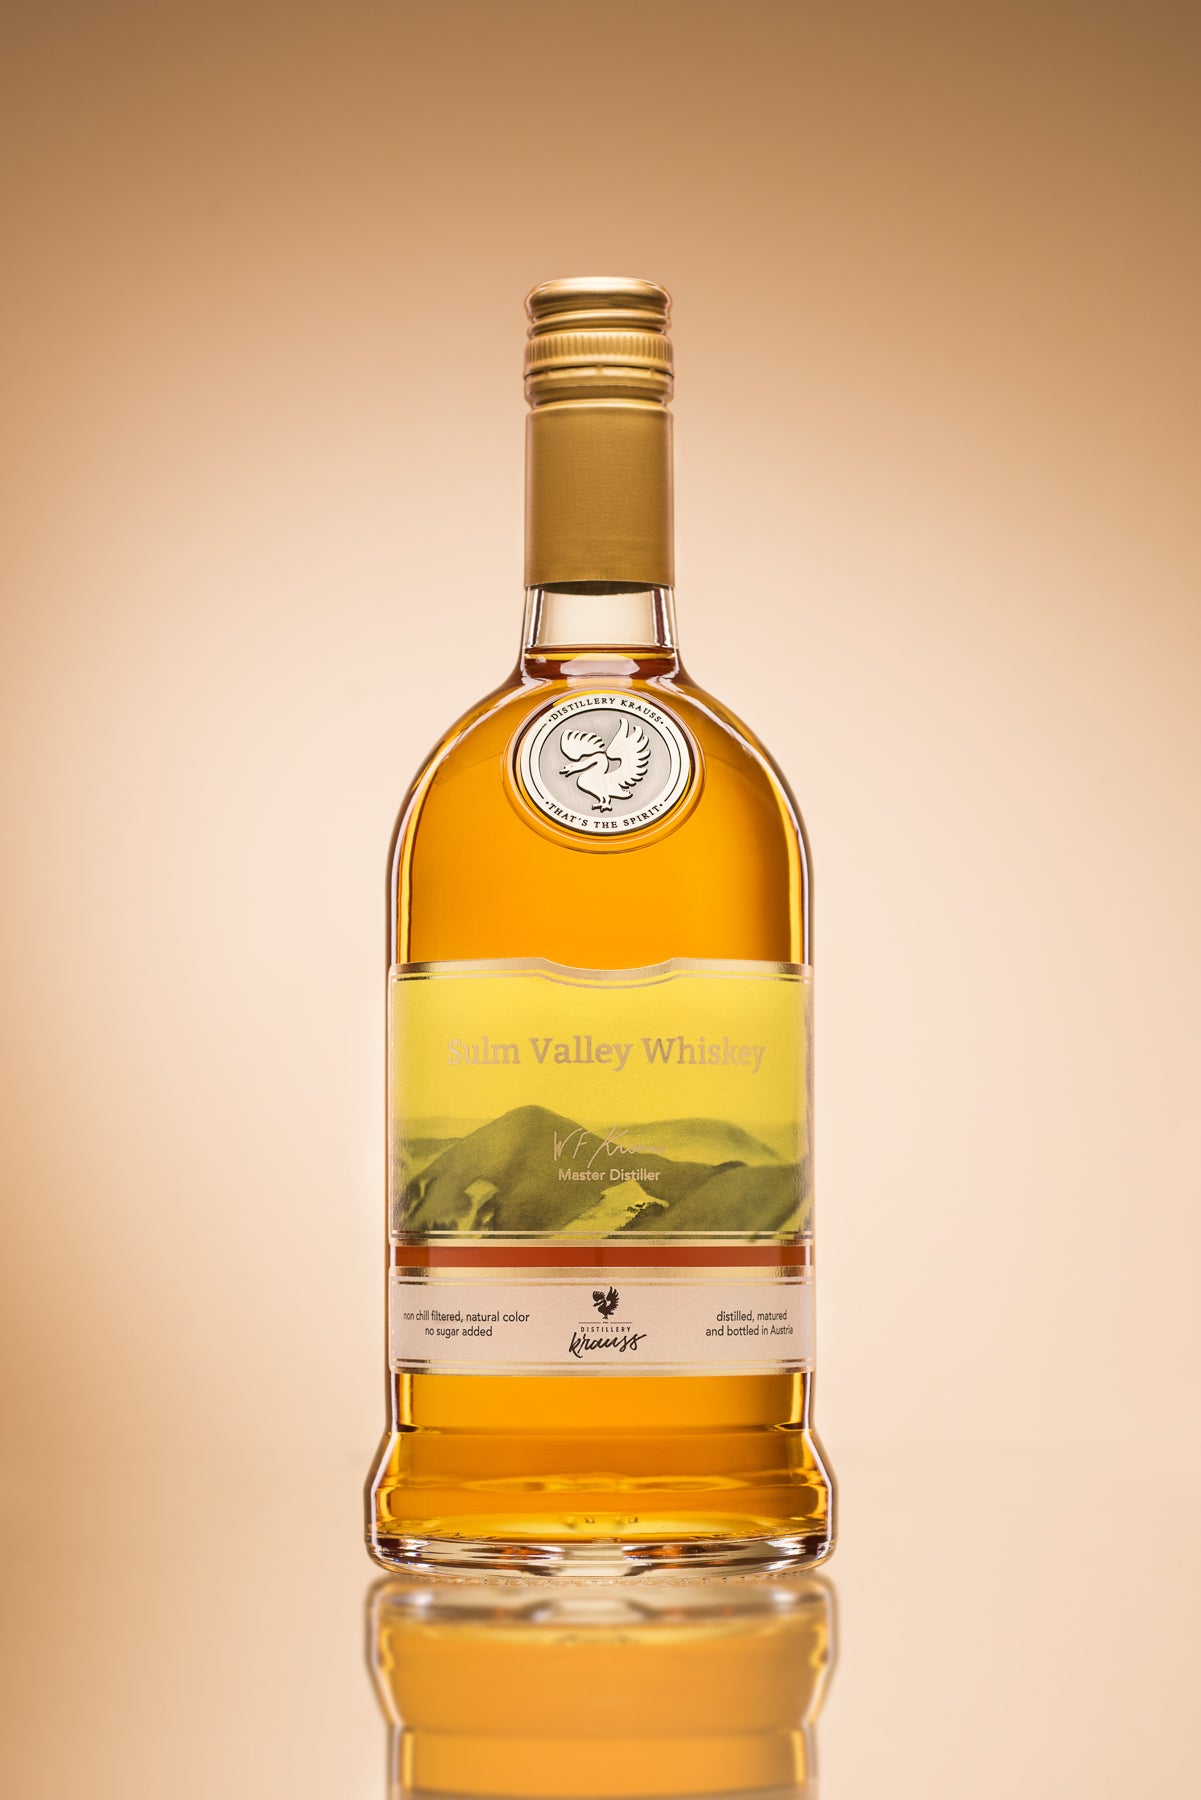 Sulm Valley Whiskey, World's Best 2022